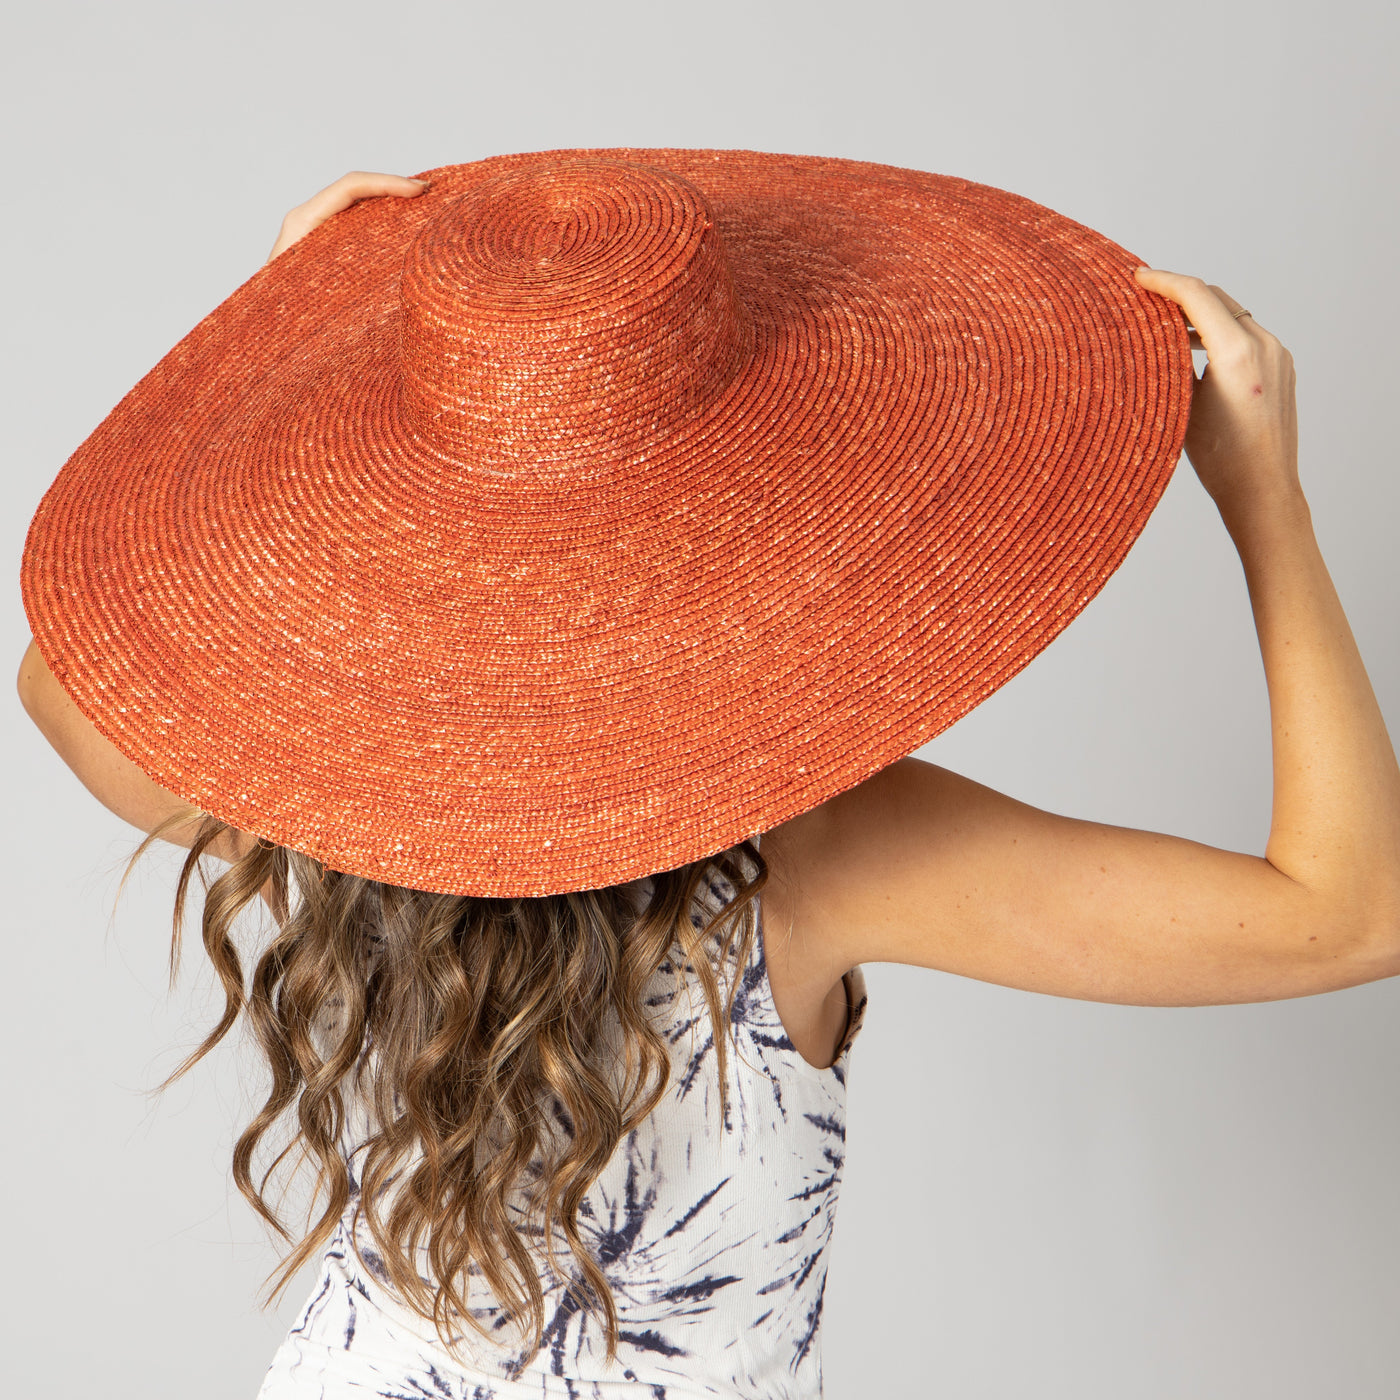 SUN BRIM - On Holiday - Oversized Wide Brim Sun Hat